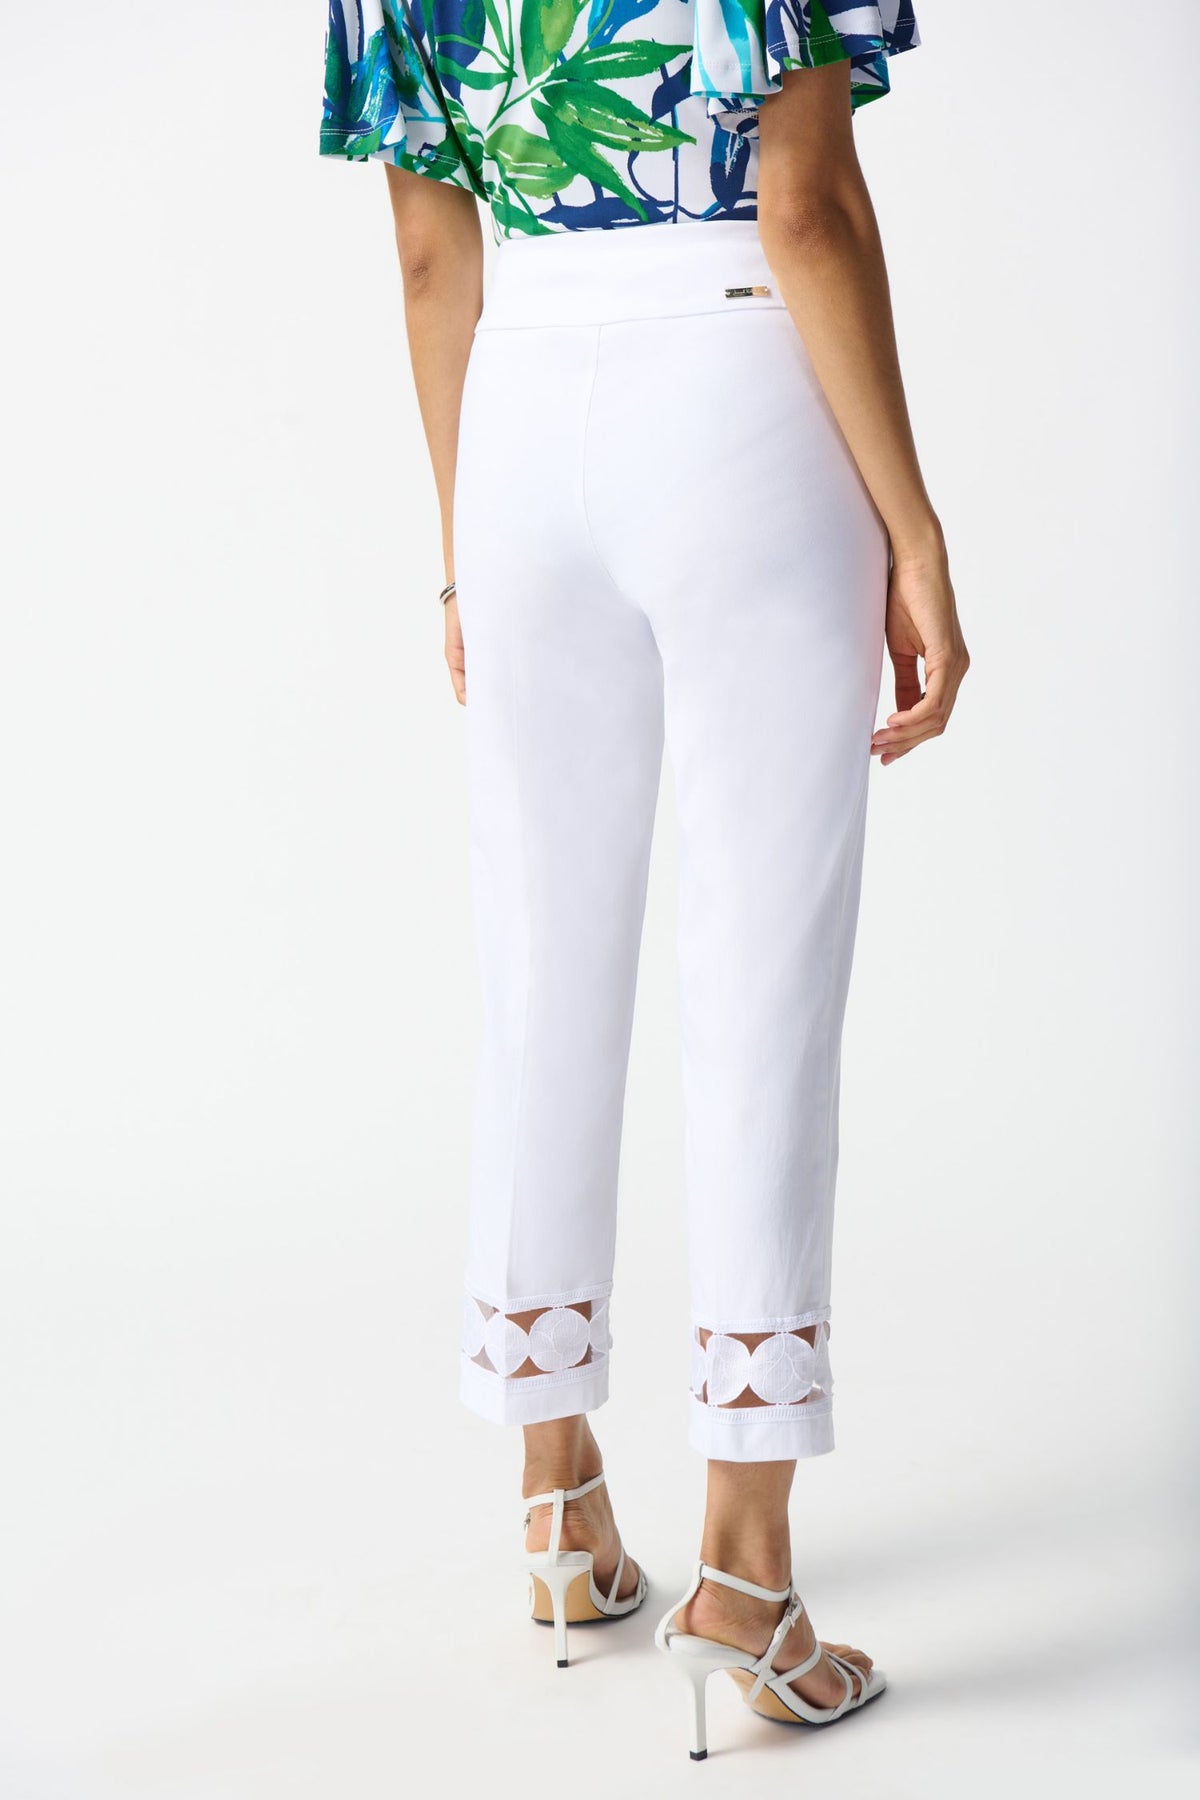 Joseph Ribkoff Millennium Cropped Pull-On Pants - Style 242131, back, white